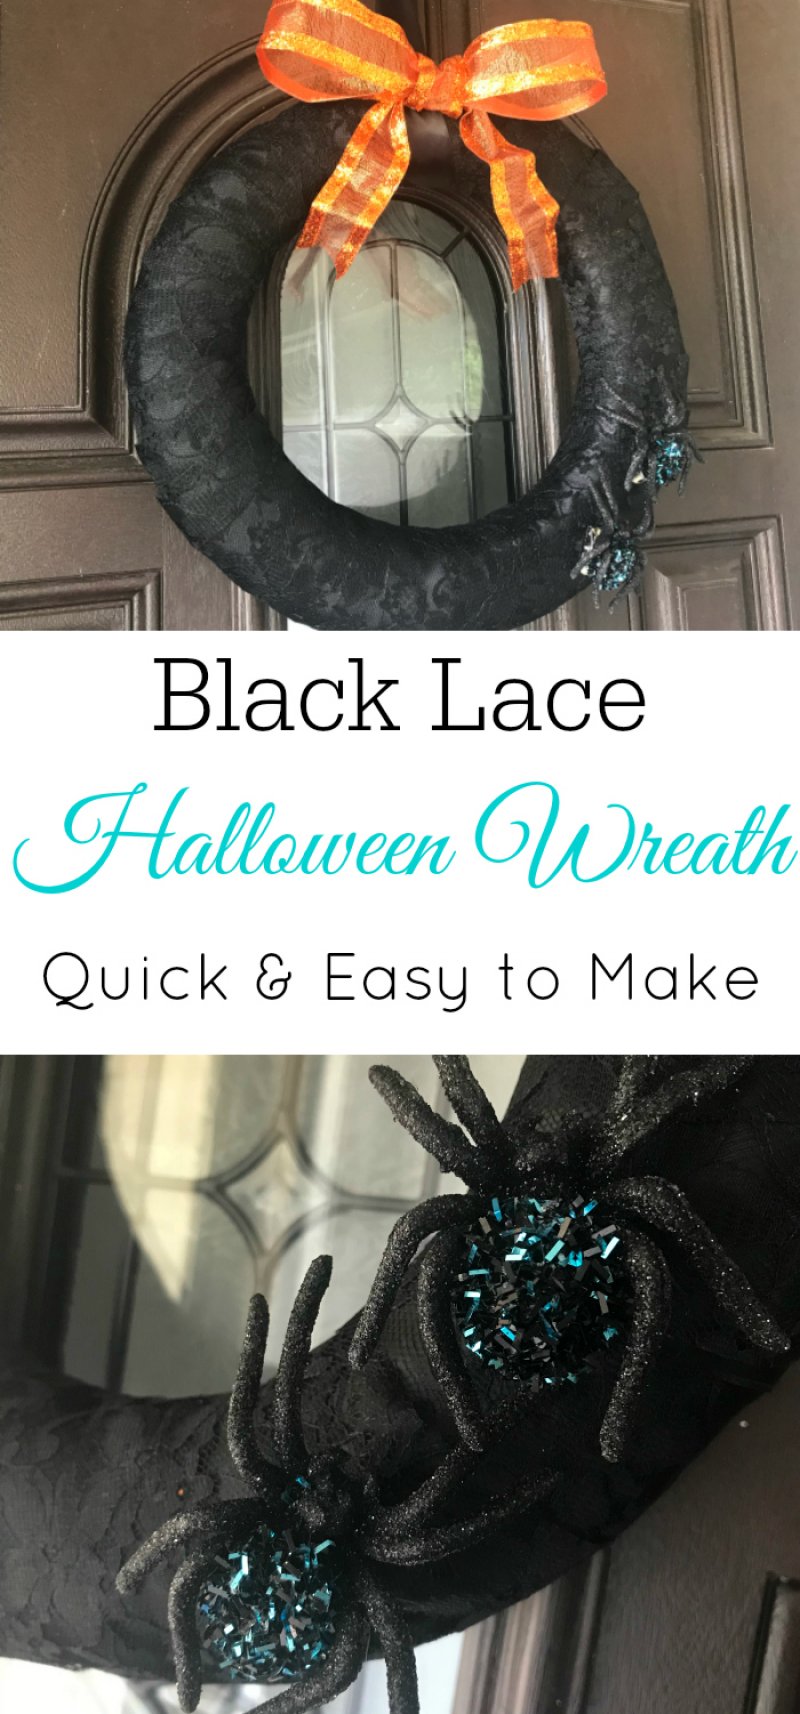 Black Lace Halloween Wreath.